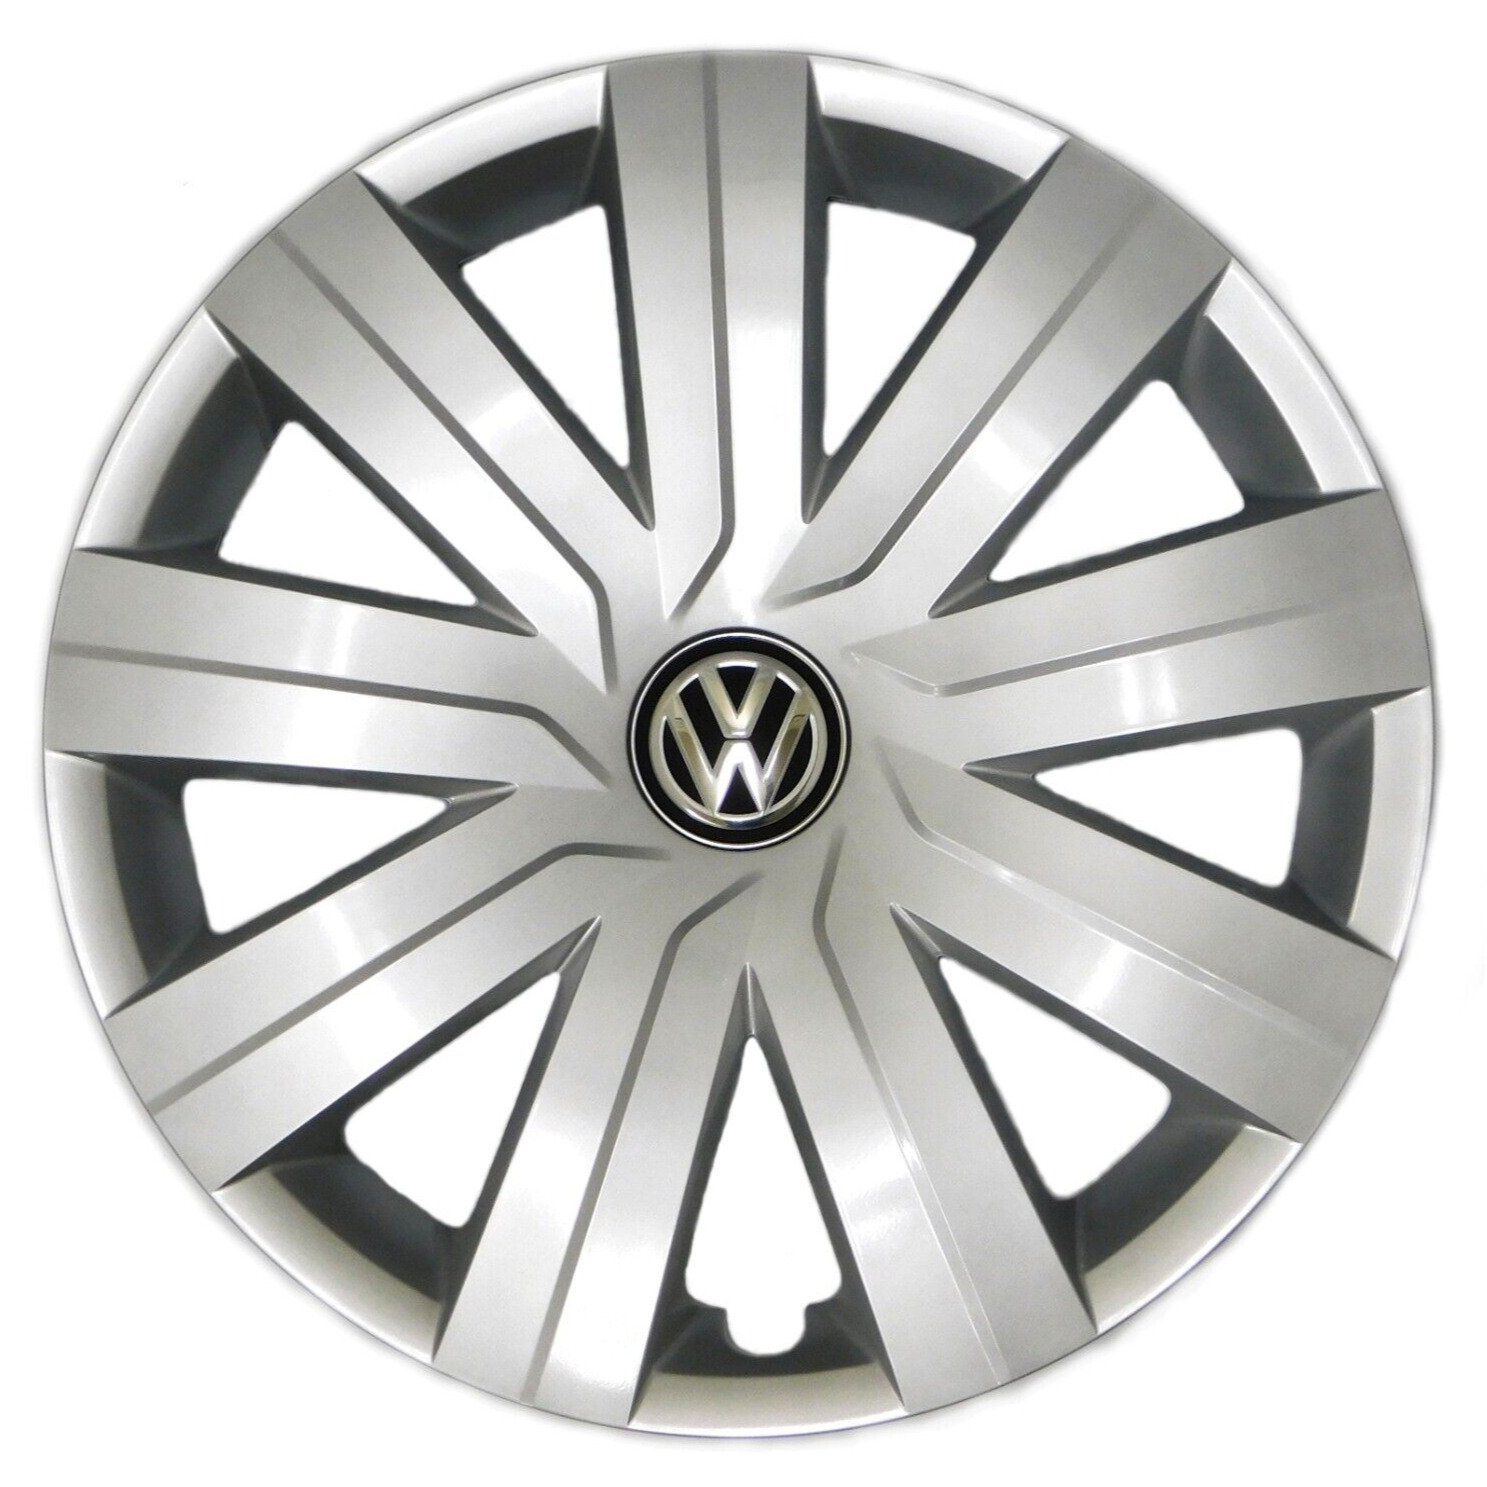 New Genuine OEM VW Hub Cap Jetta 2015-2018 9-spoke Wheel Cover fits 15